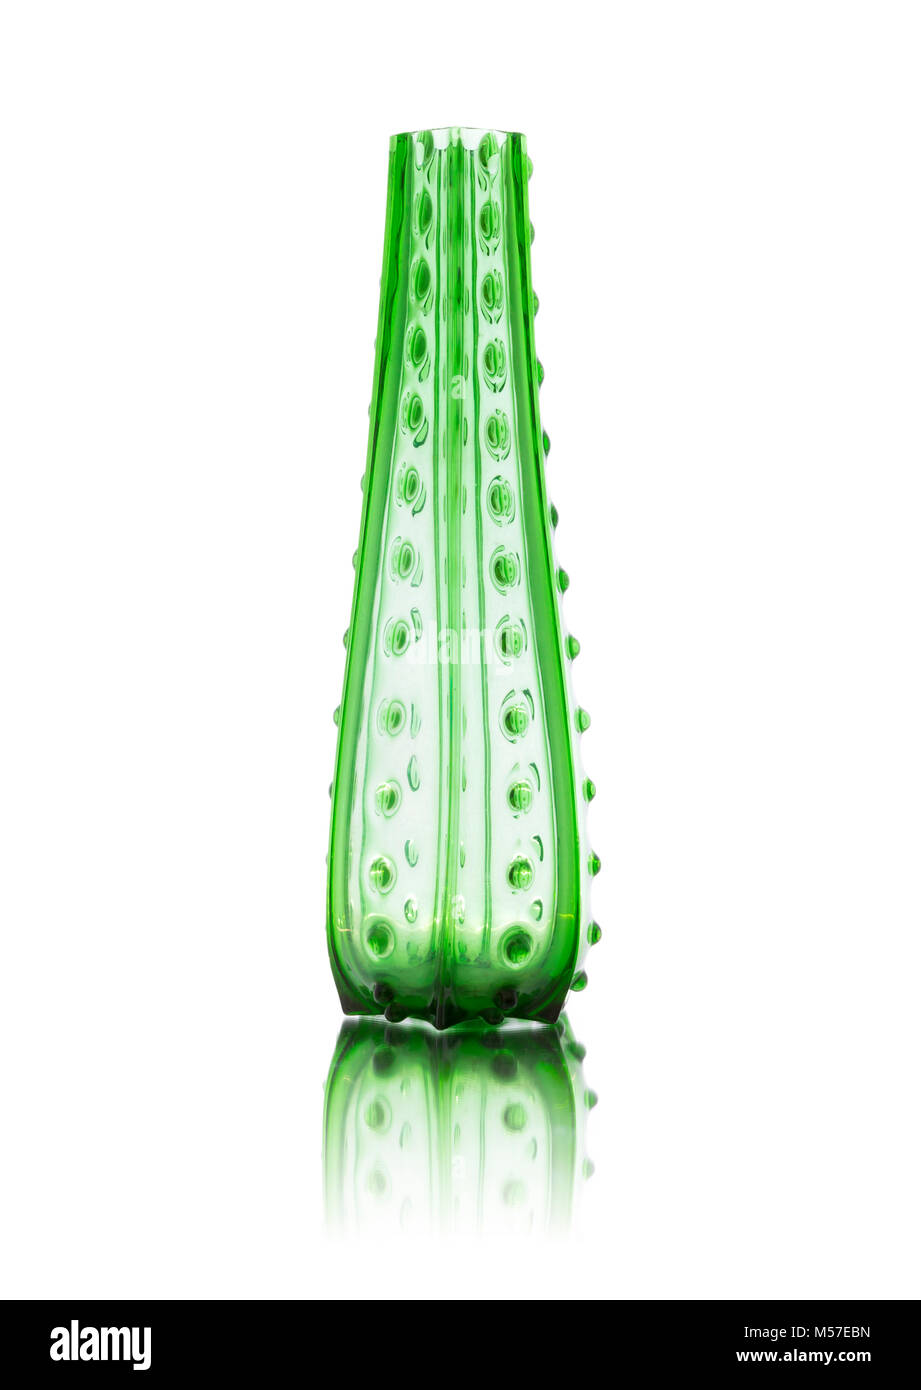 Antique green glass vase isolated on white background Stock Photo